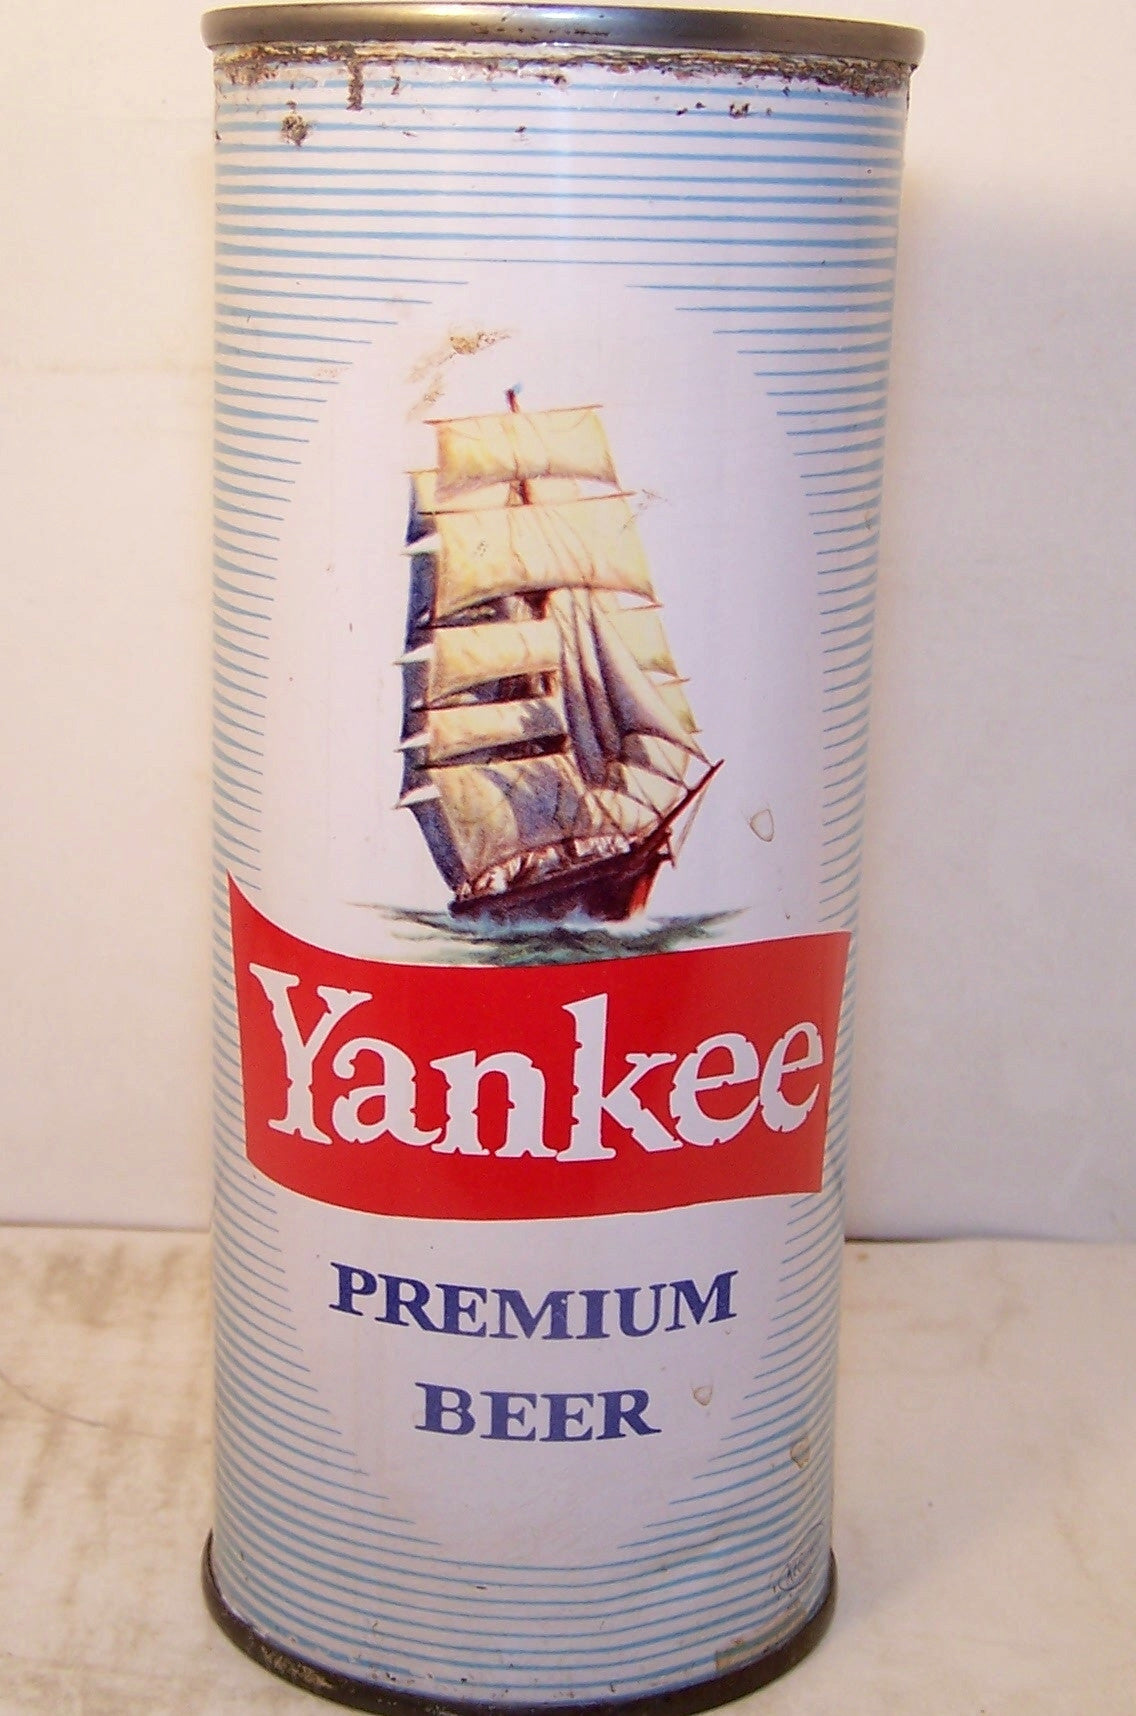 Yankee Premium Beer, USBC 236-16, Grade 1- sold on 10/10/15